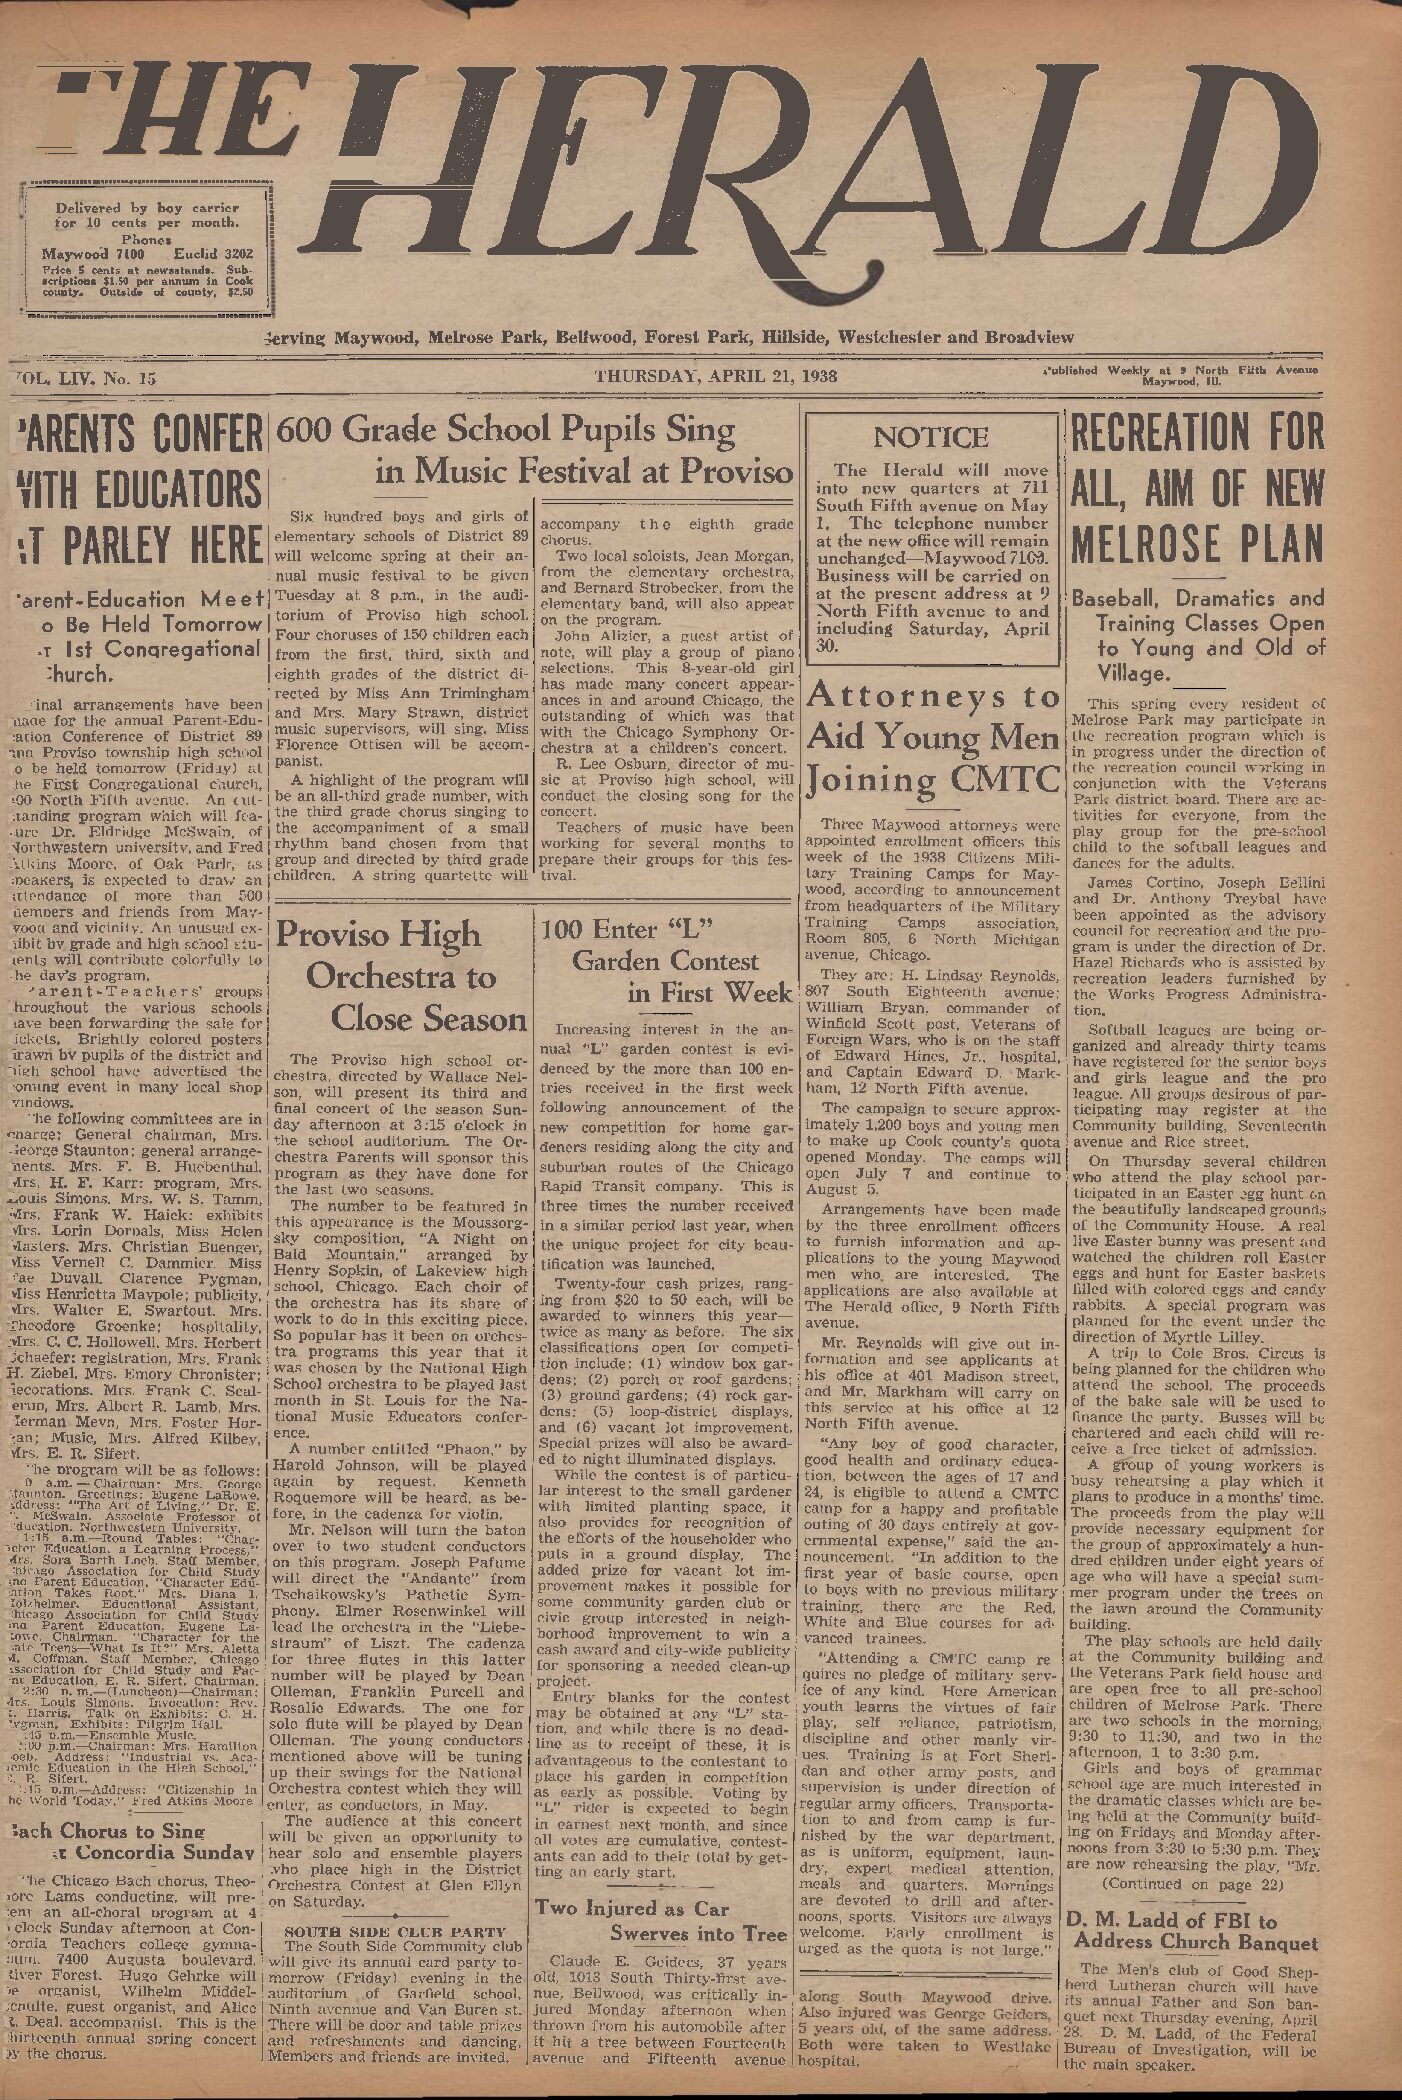 The Herald – 19380421